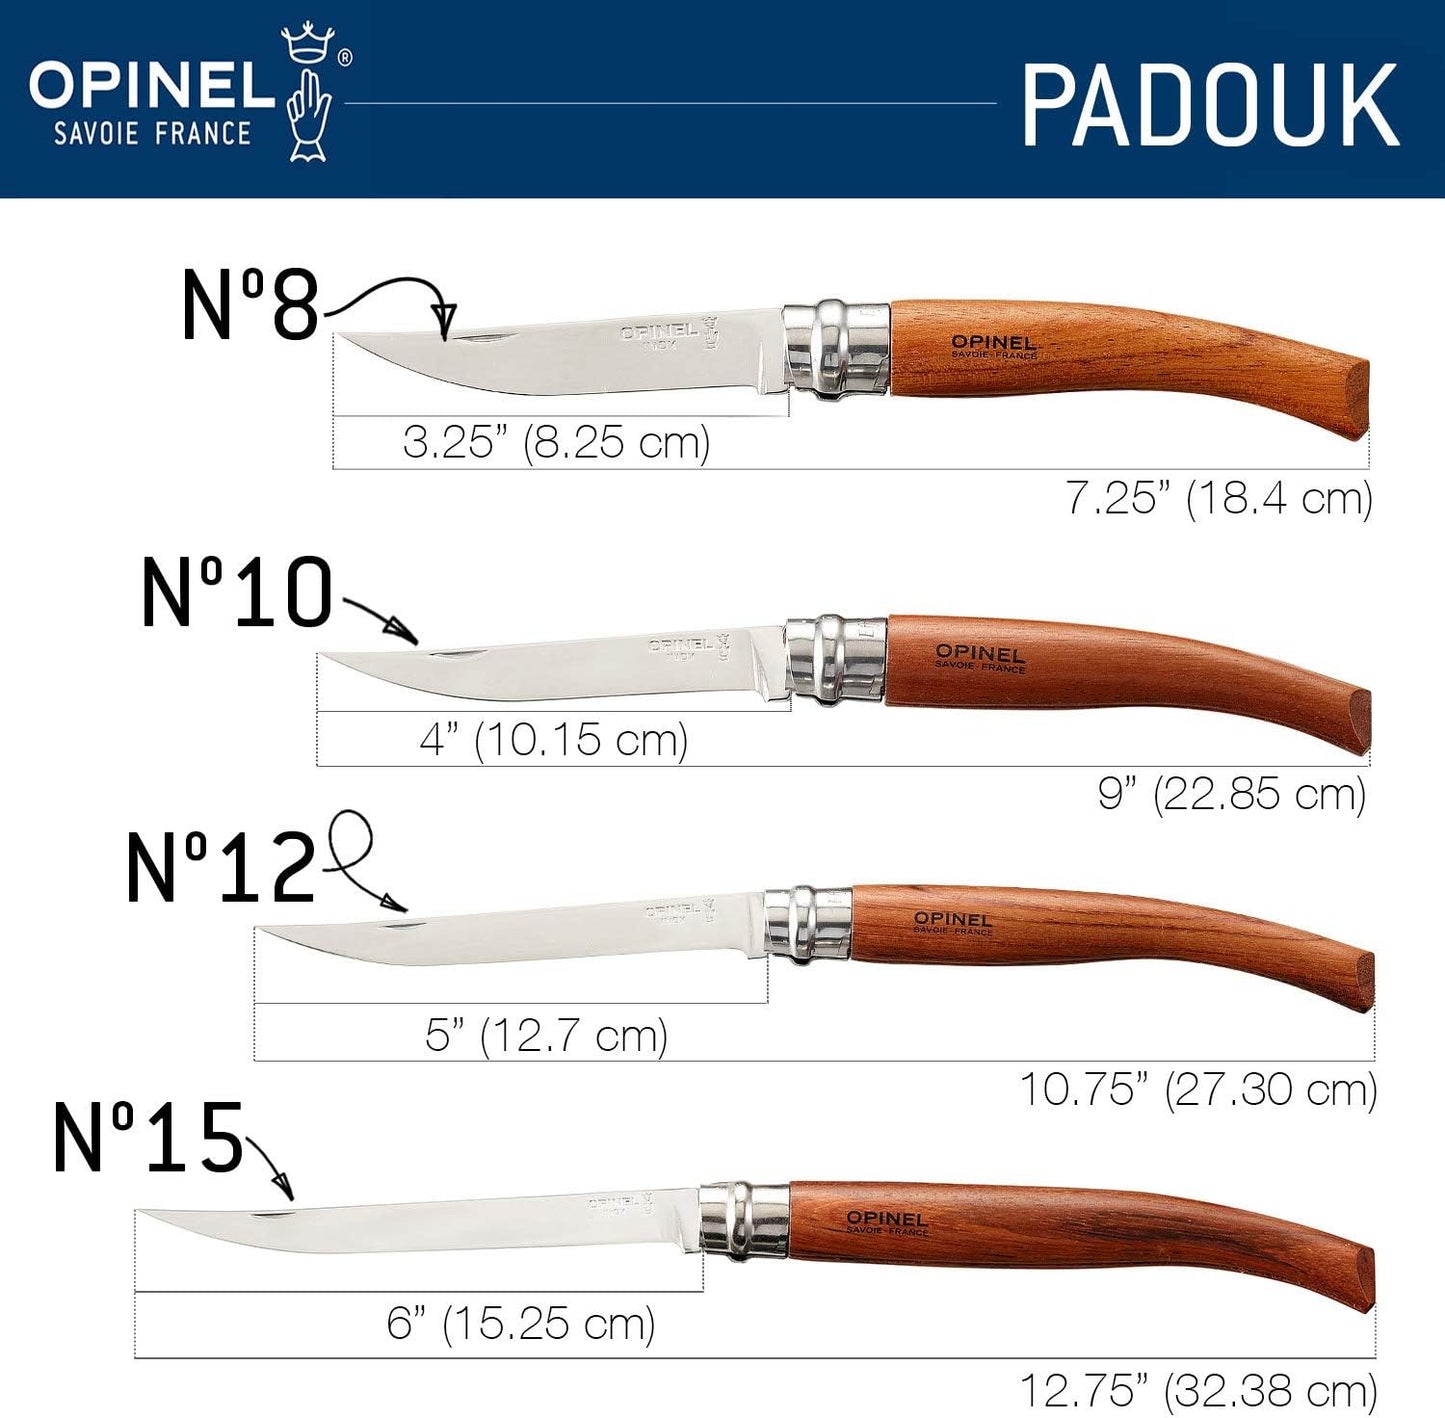 Opinel No.15 Slim Padouk 5.9" Stainless Folding Fillet Knife - Made in France